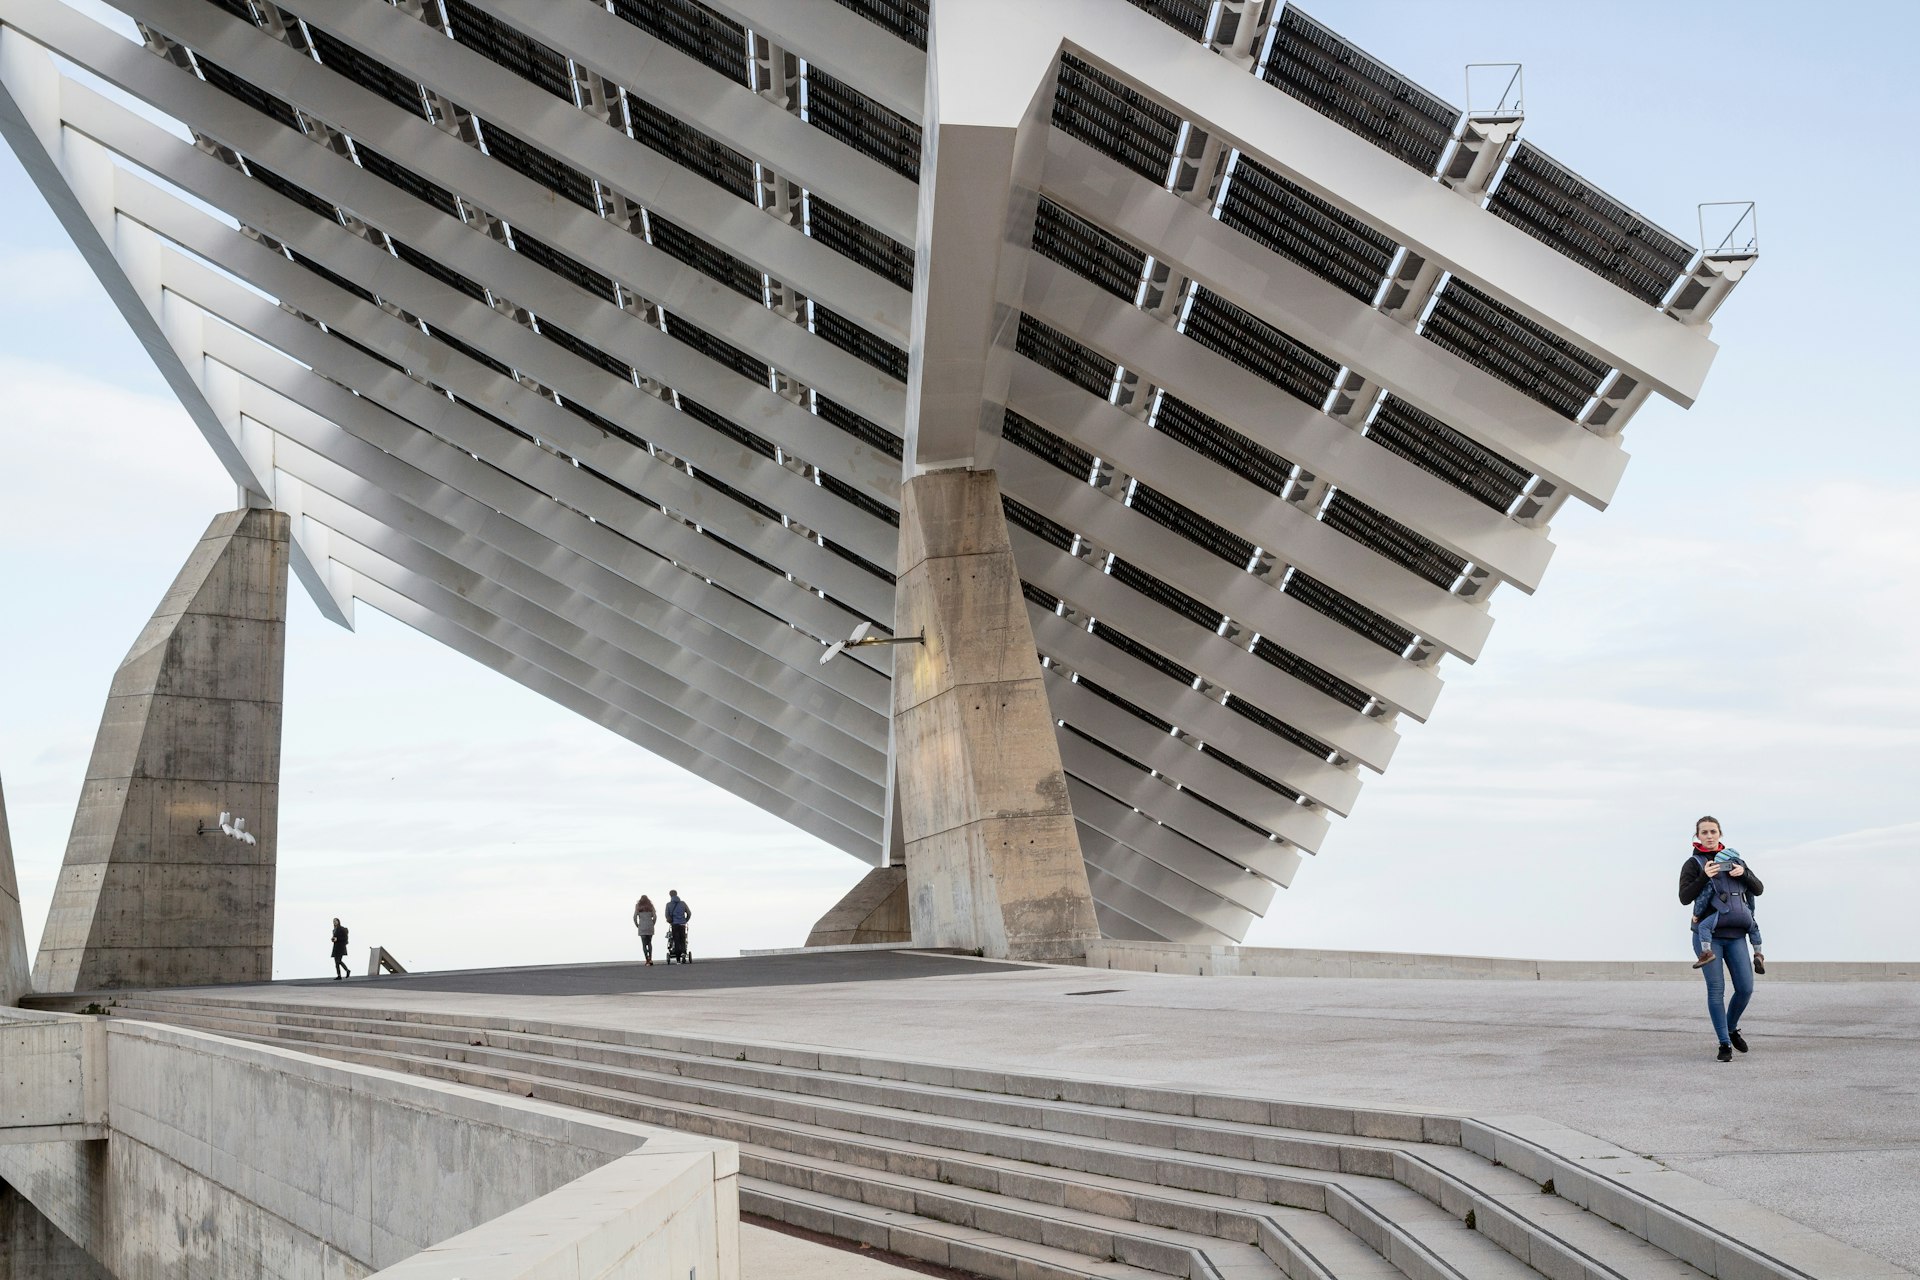 Large photovoltaic pergola designed by Torres & Lapena, in the Parc del Forum space